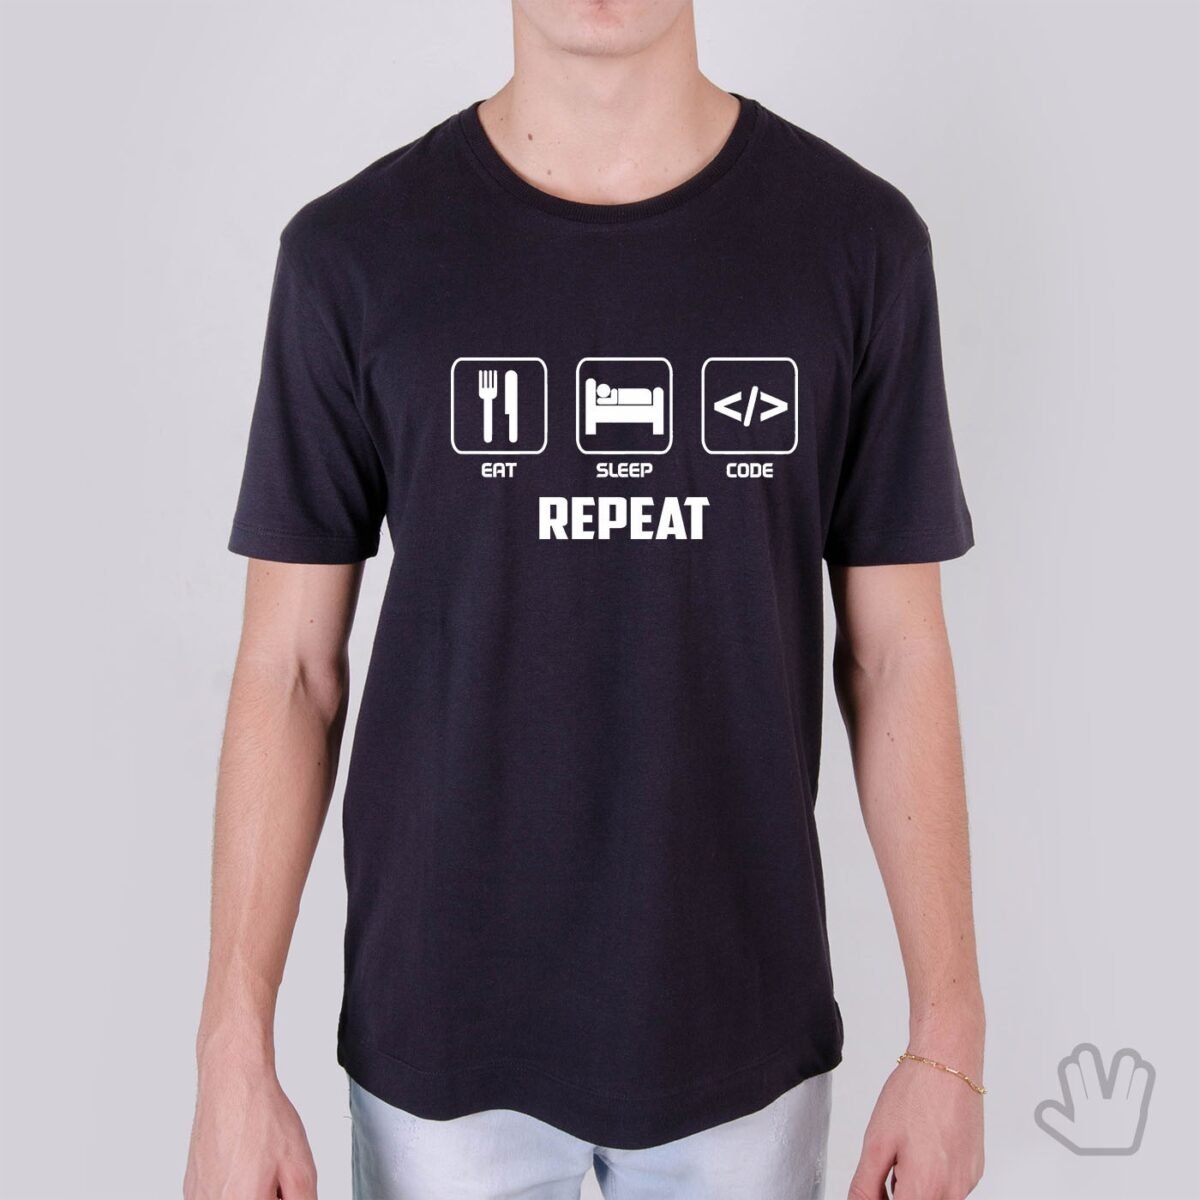 Camiseta REPEAT - Loja Nerd